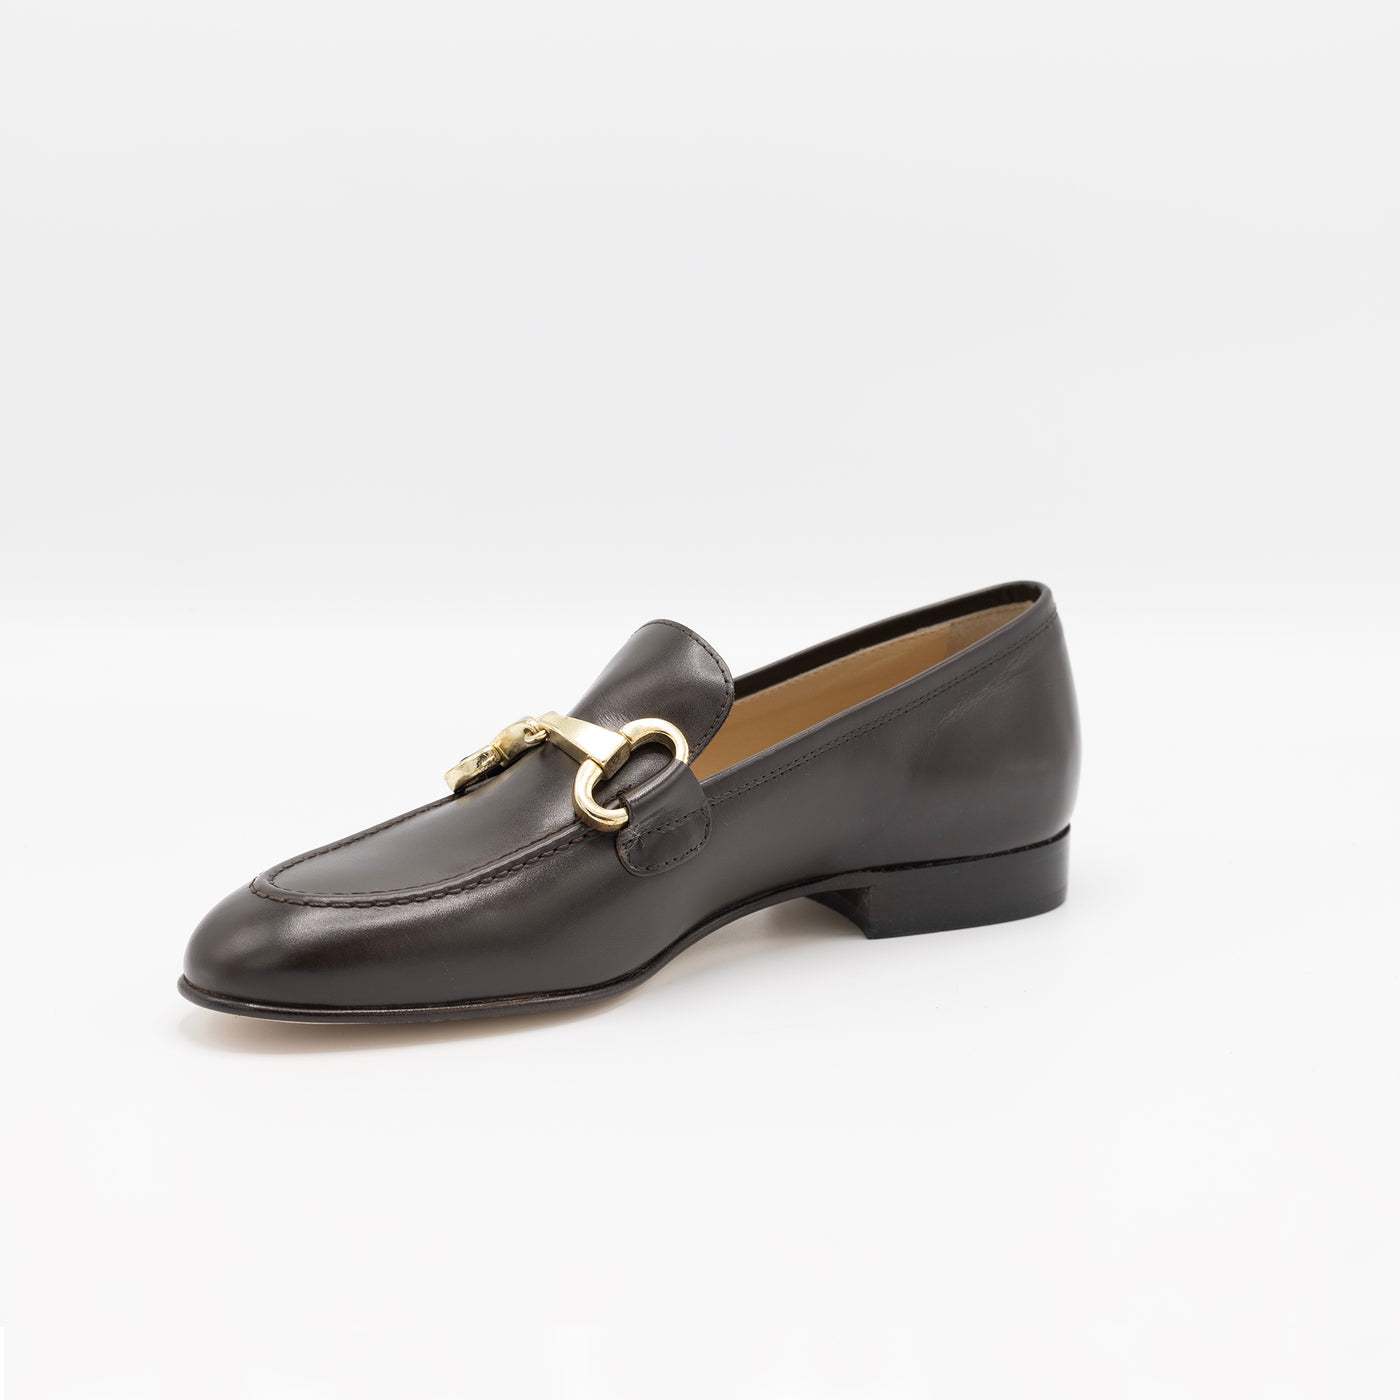 Horesbit loafer in darkbrown leather with golden buckle. 